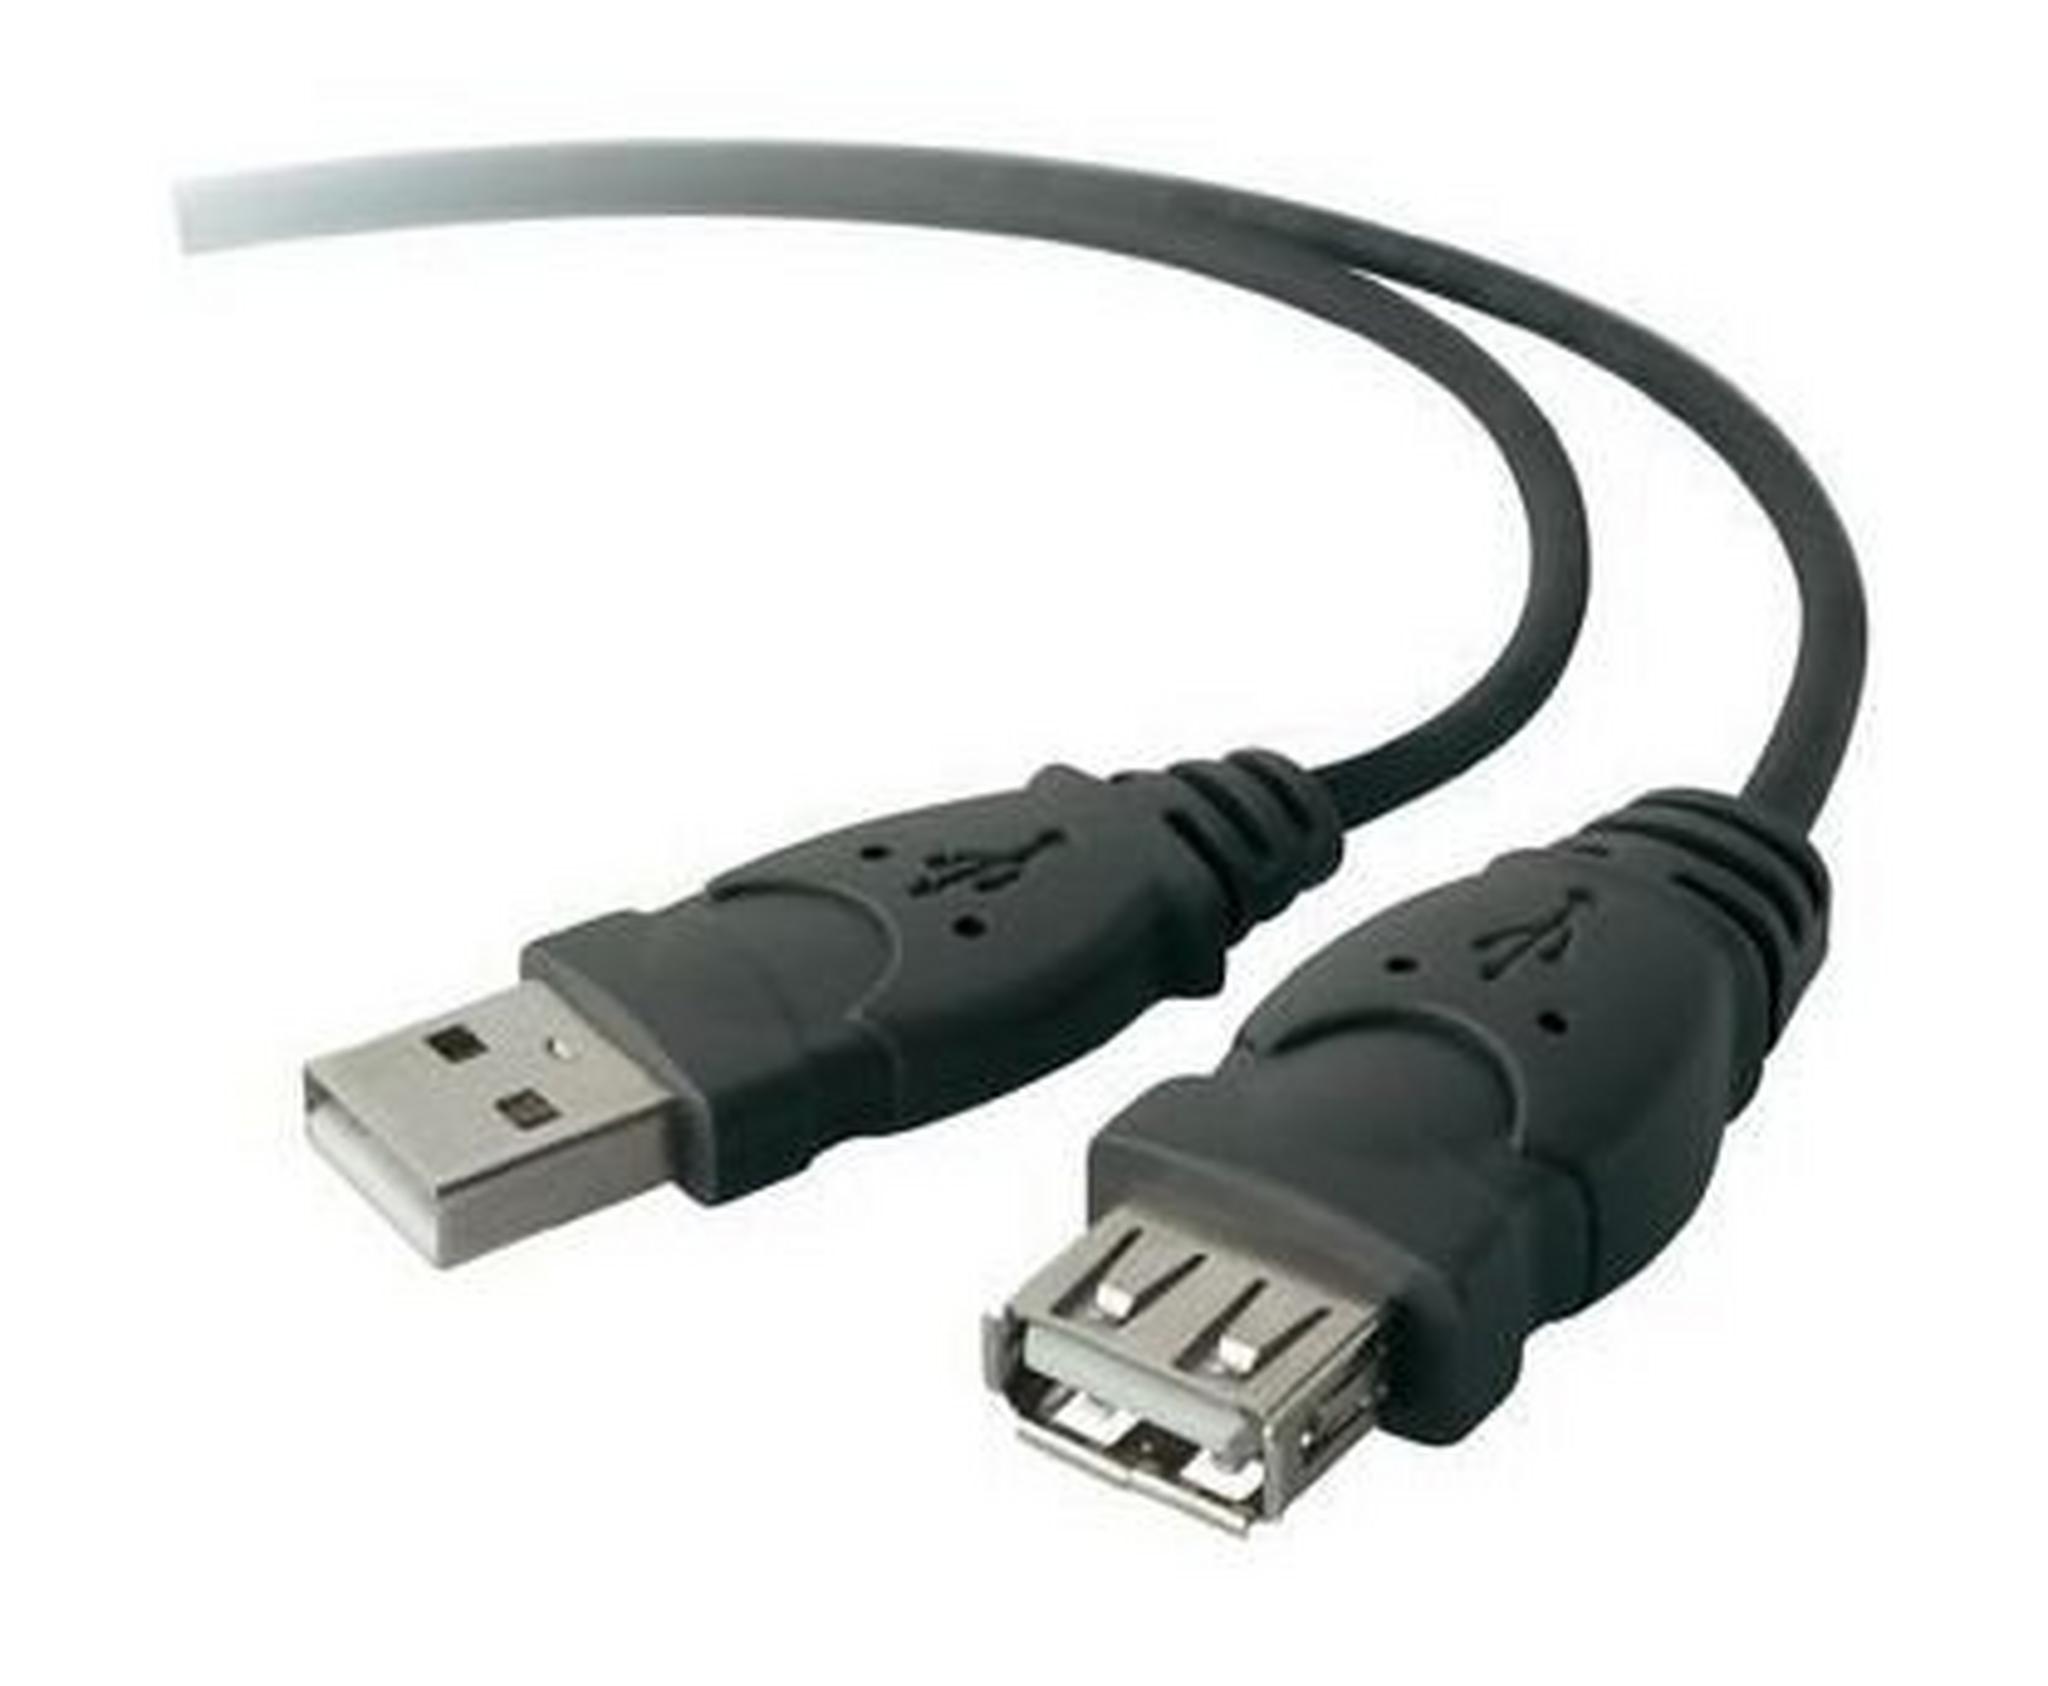 Belkin USB 2.0 Extension Cable 3 Meters (F3U153CP3M) - Black